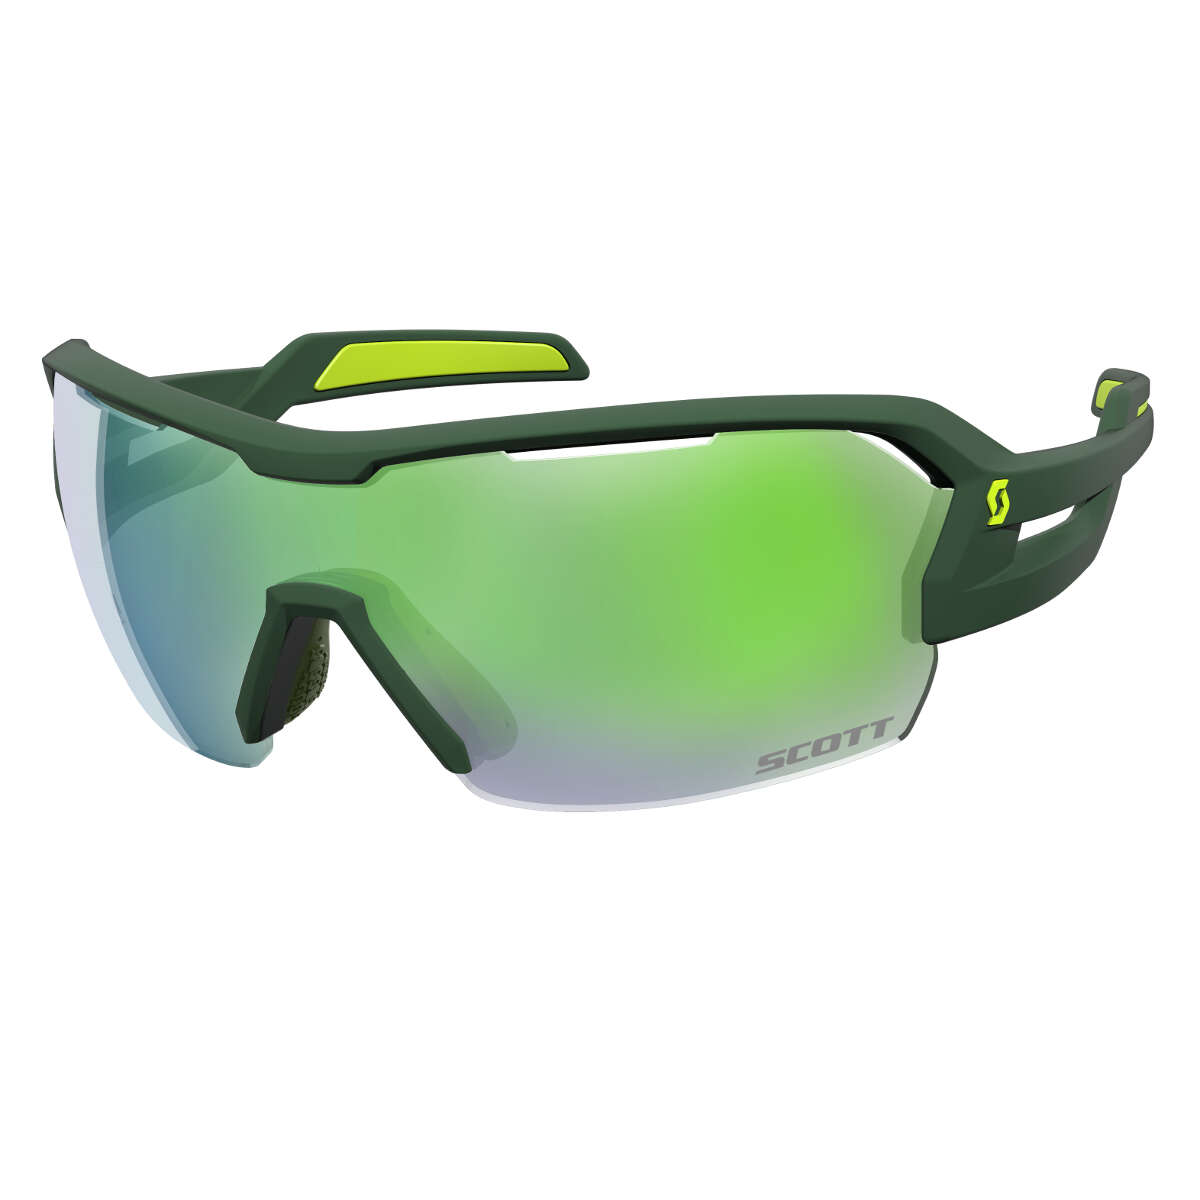 Scott Sport Glasses Spur Green/Yellow - Green Chrome